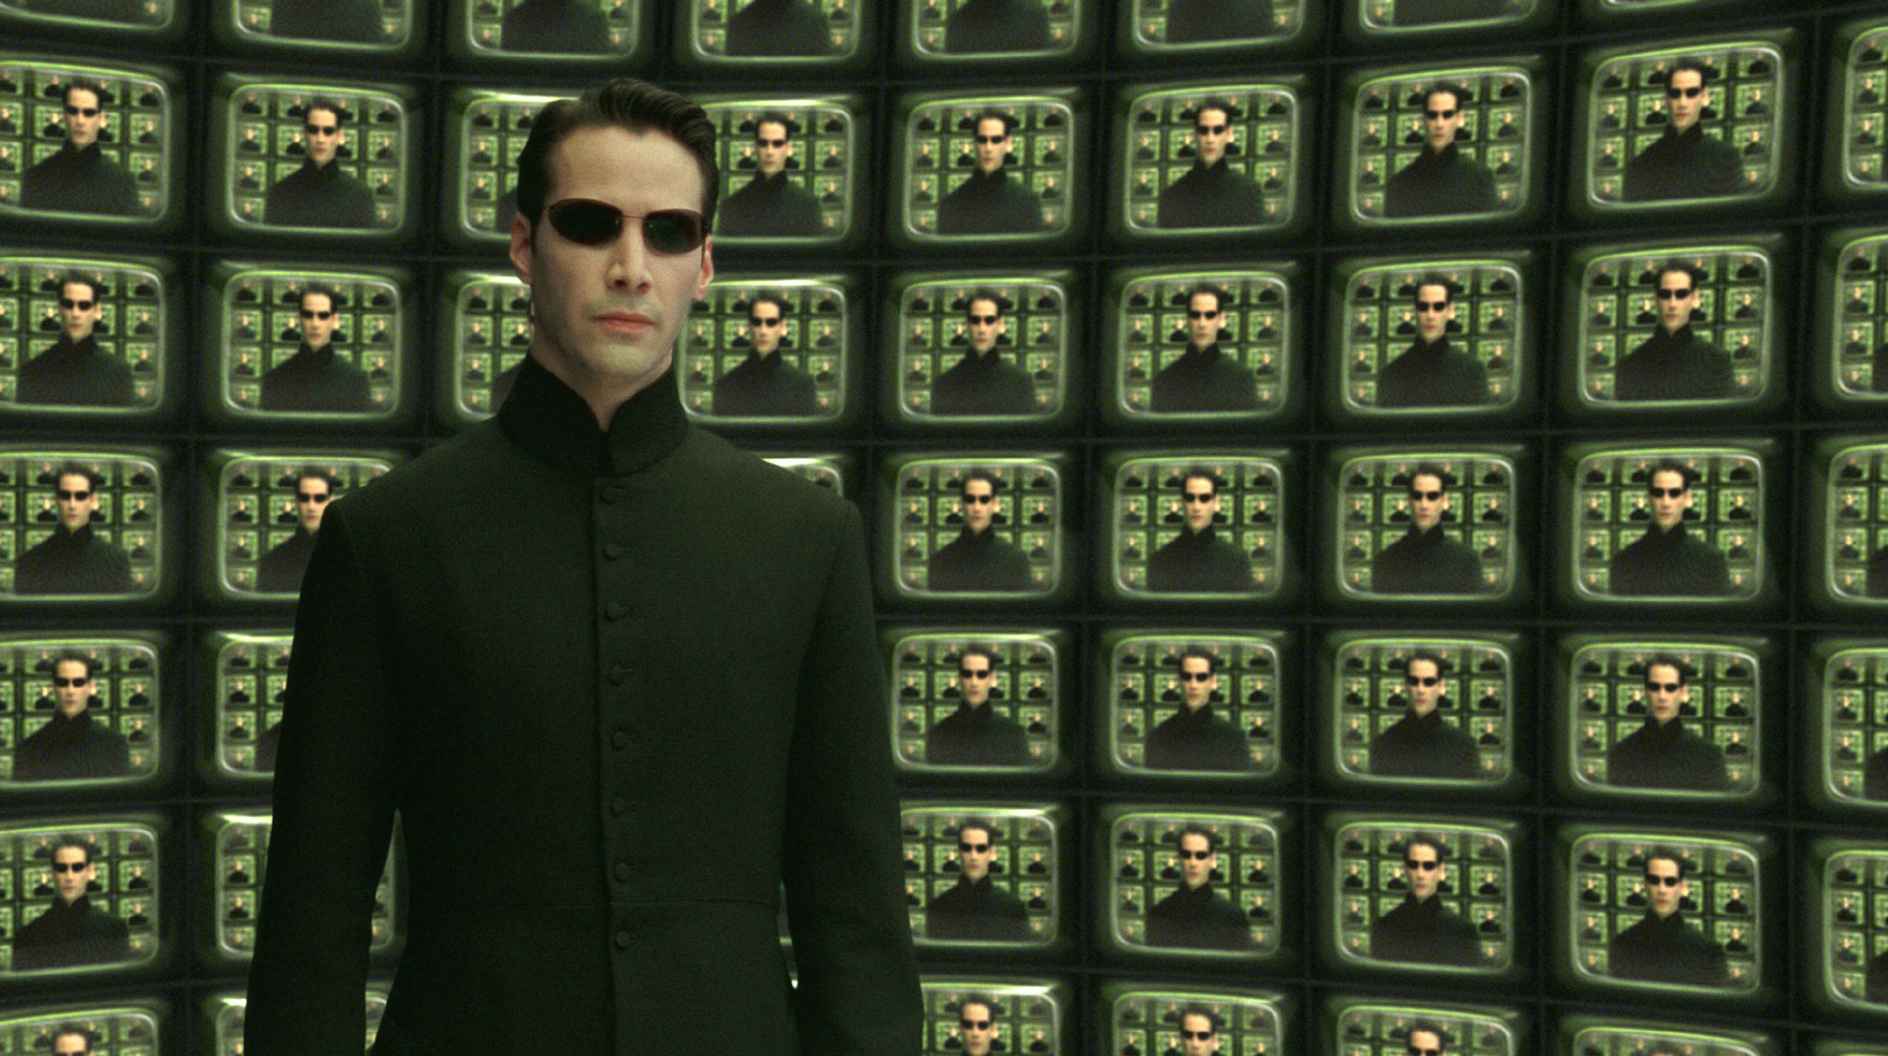 Neo stands in front of matrix of TVs